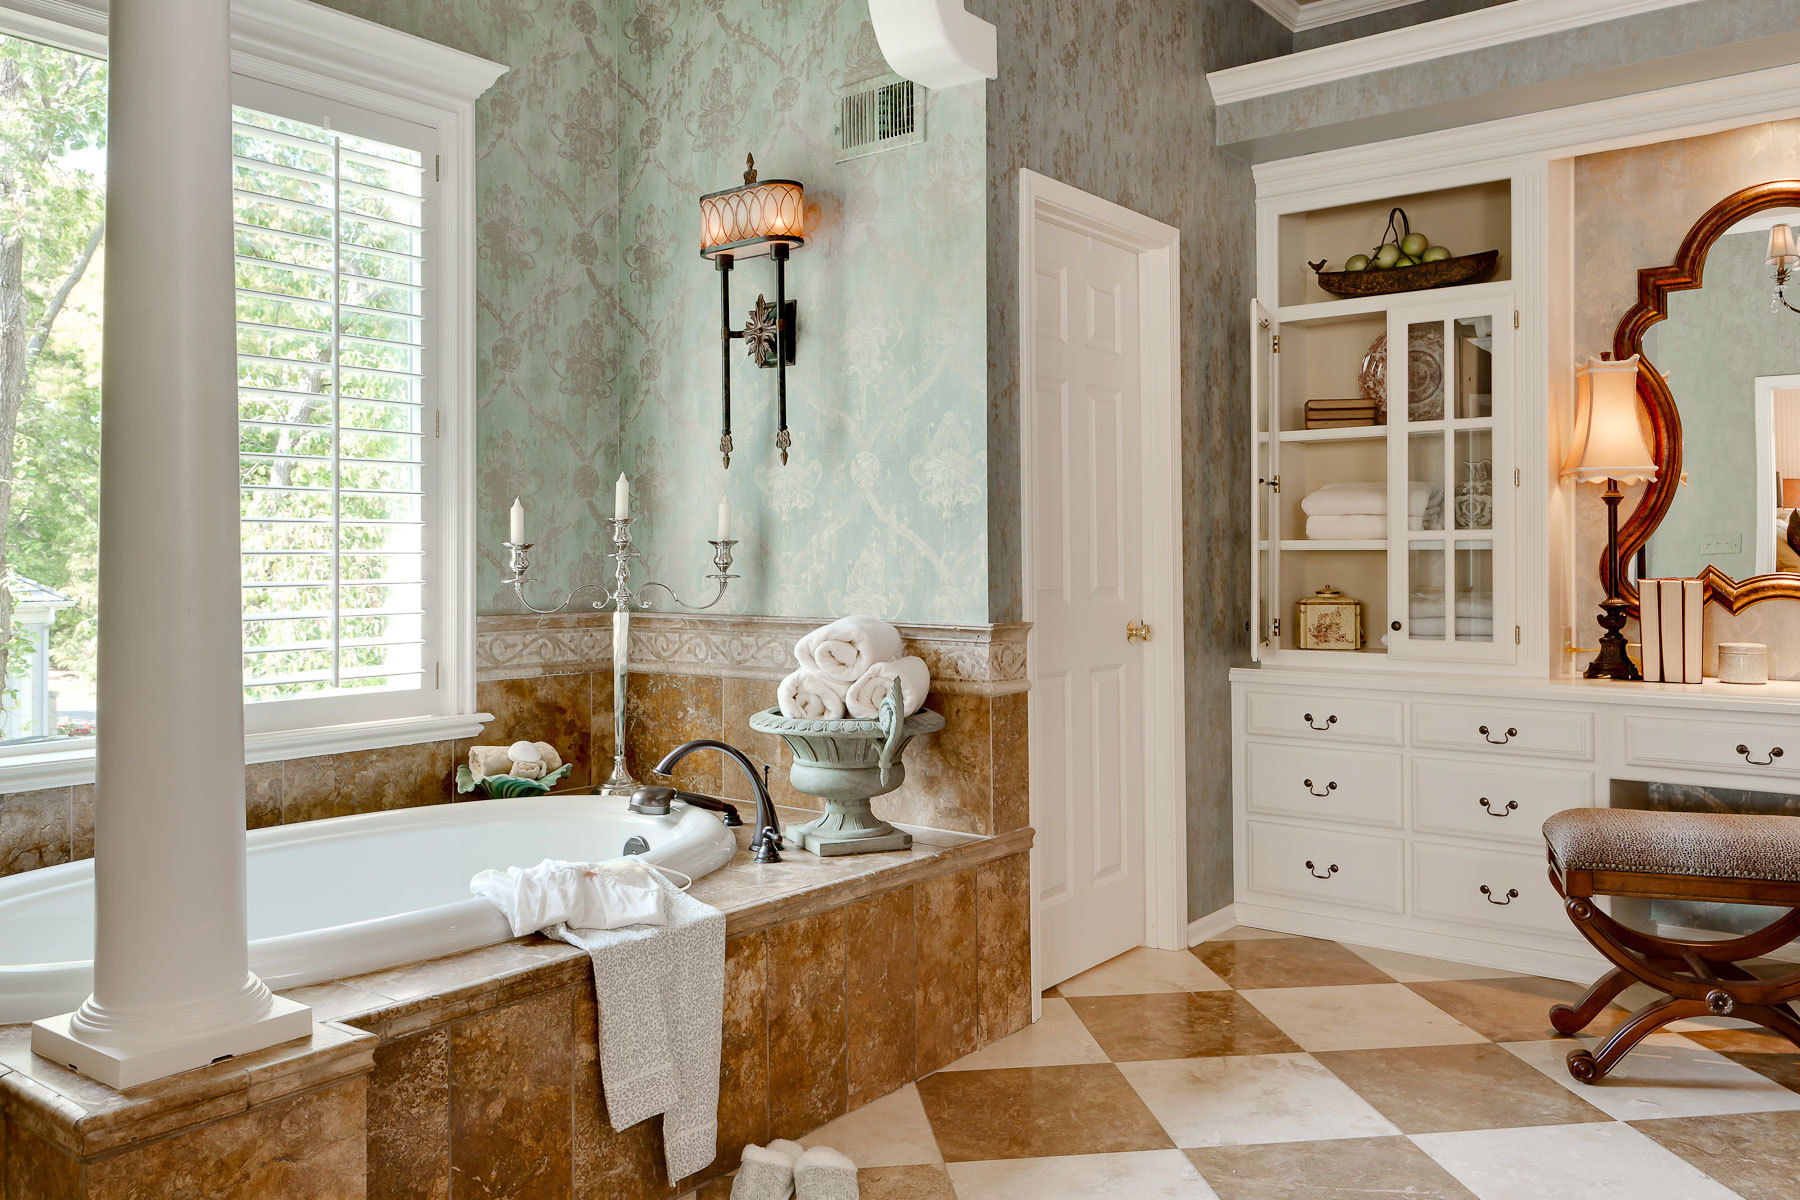 Amazing set of vintage style bathroom renovation ideas - Interior ...